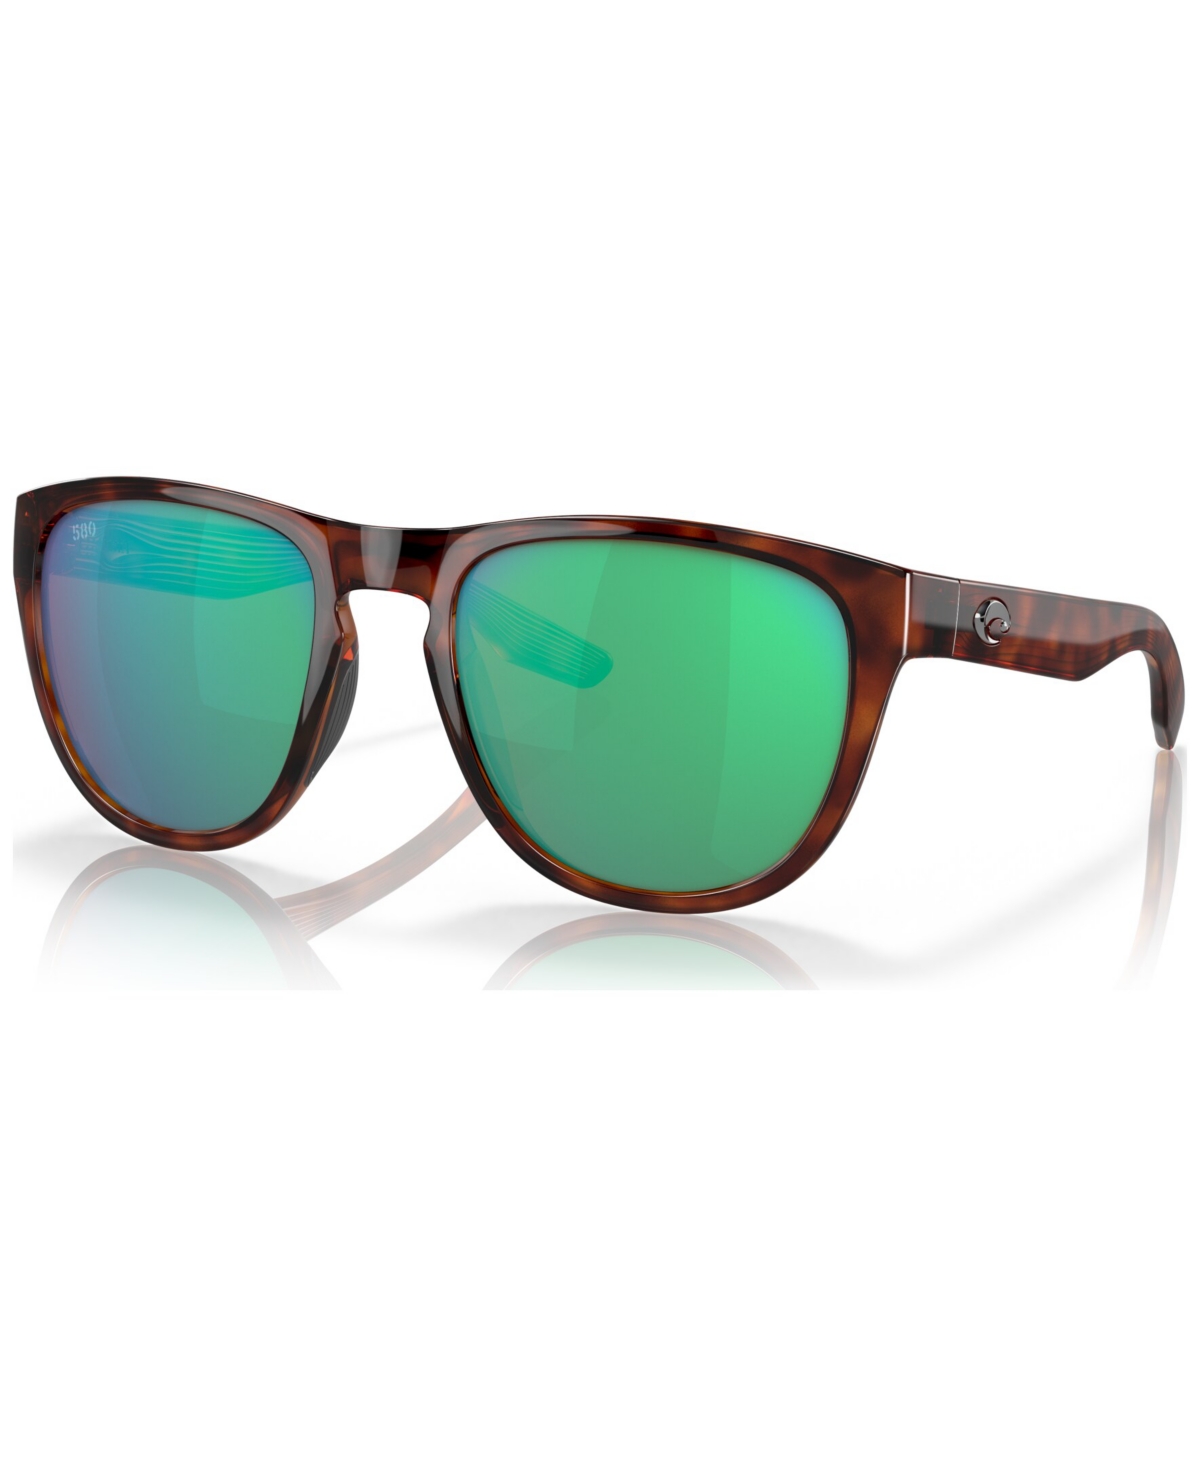 Unisex Polarized Sunglasses, 6S908255-zp - Tortoise